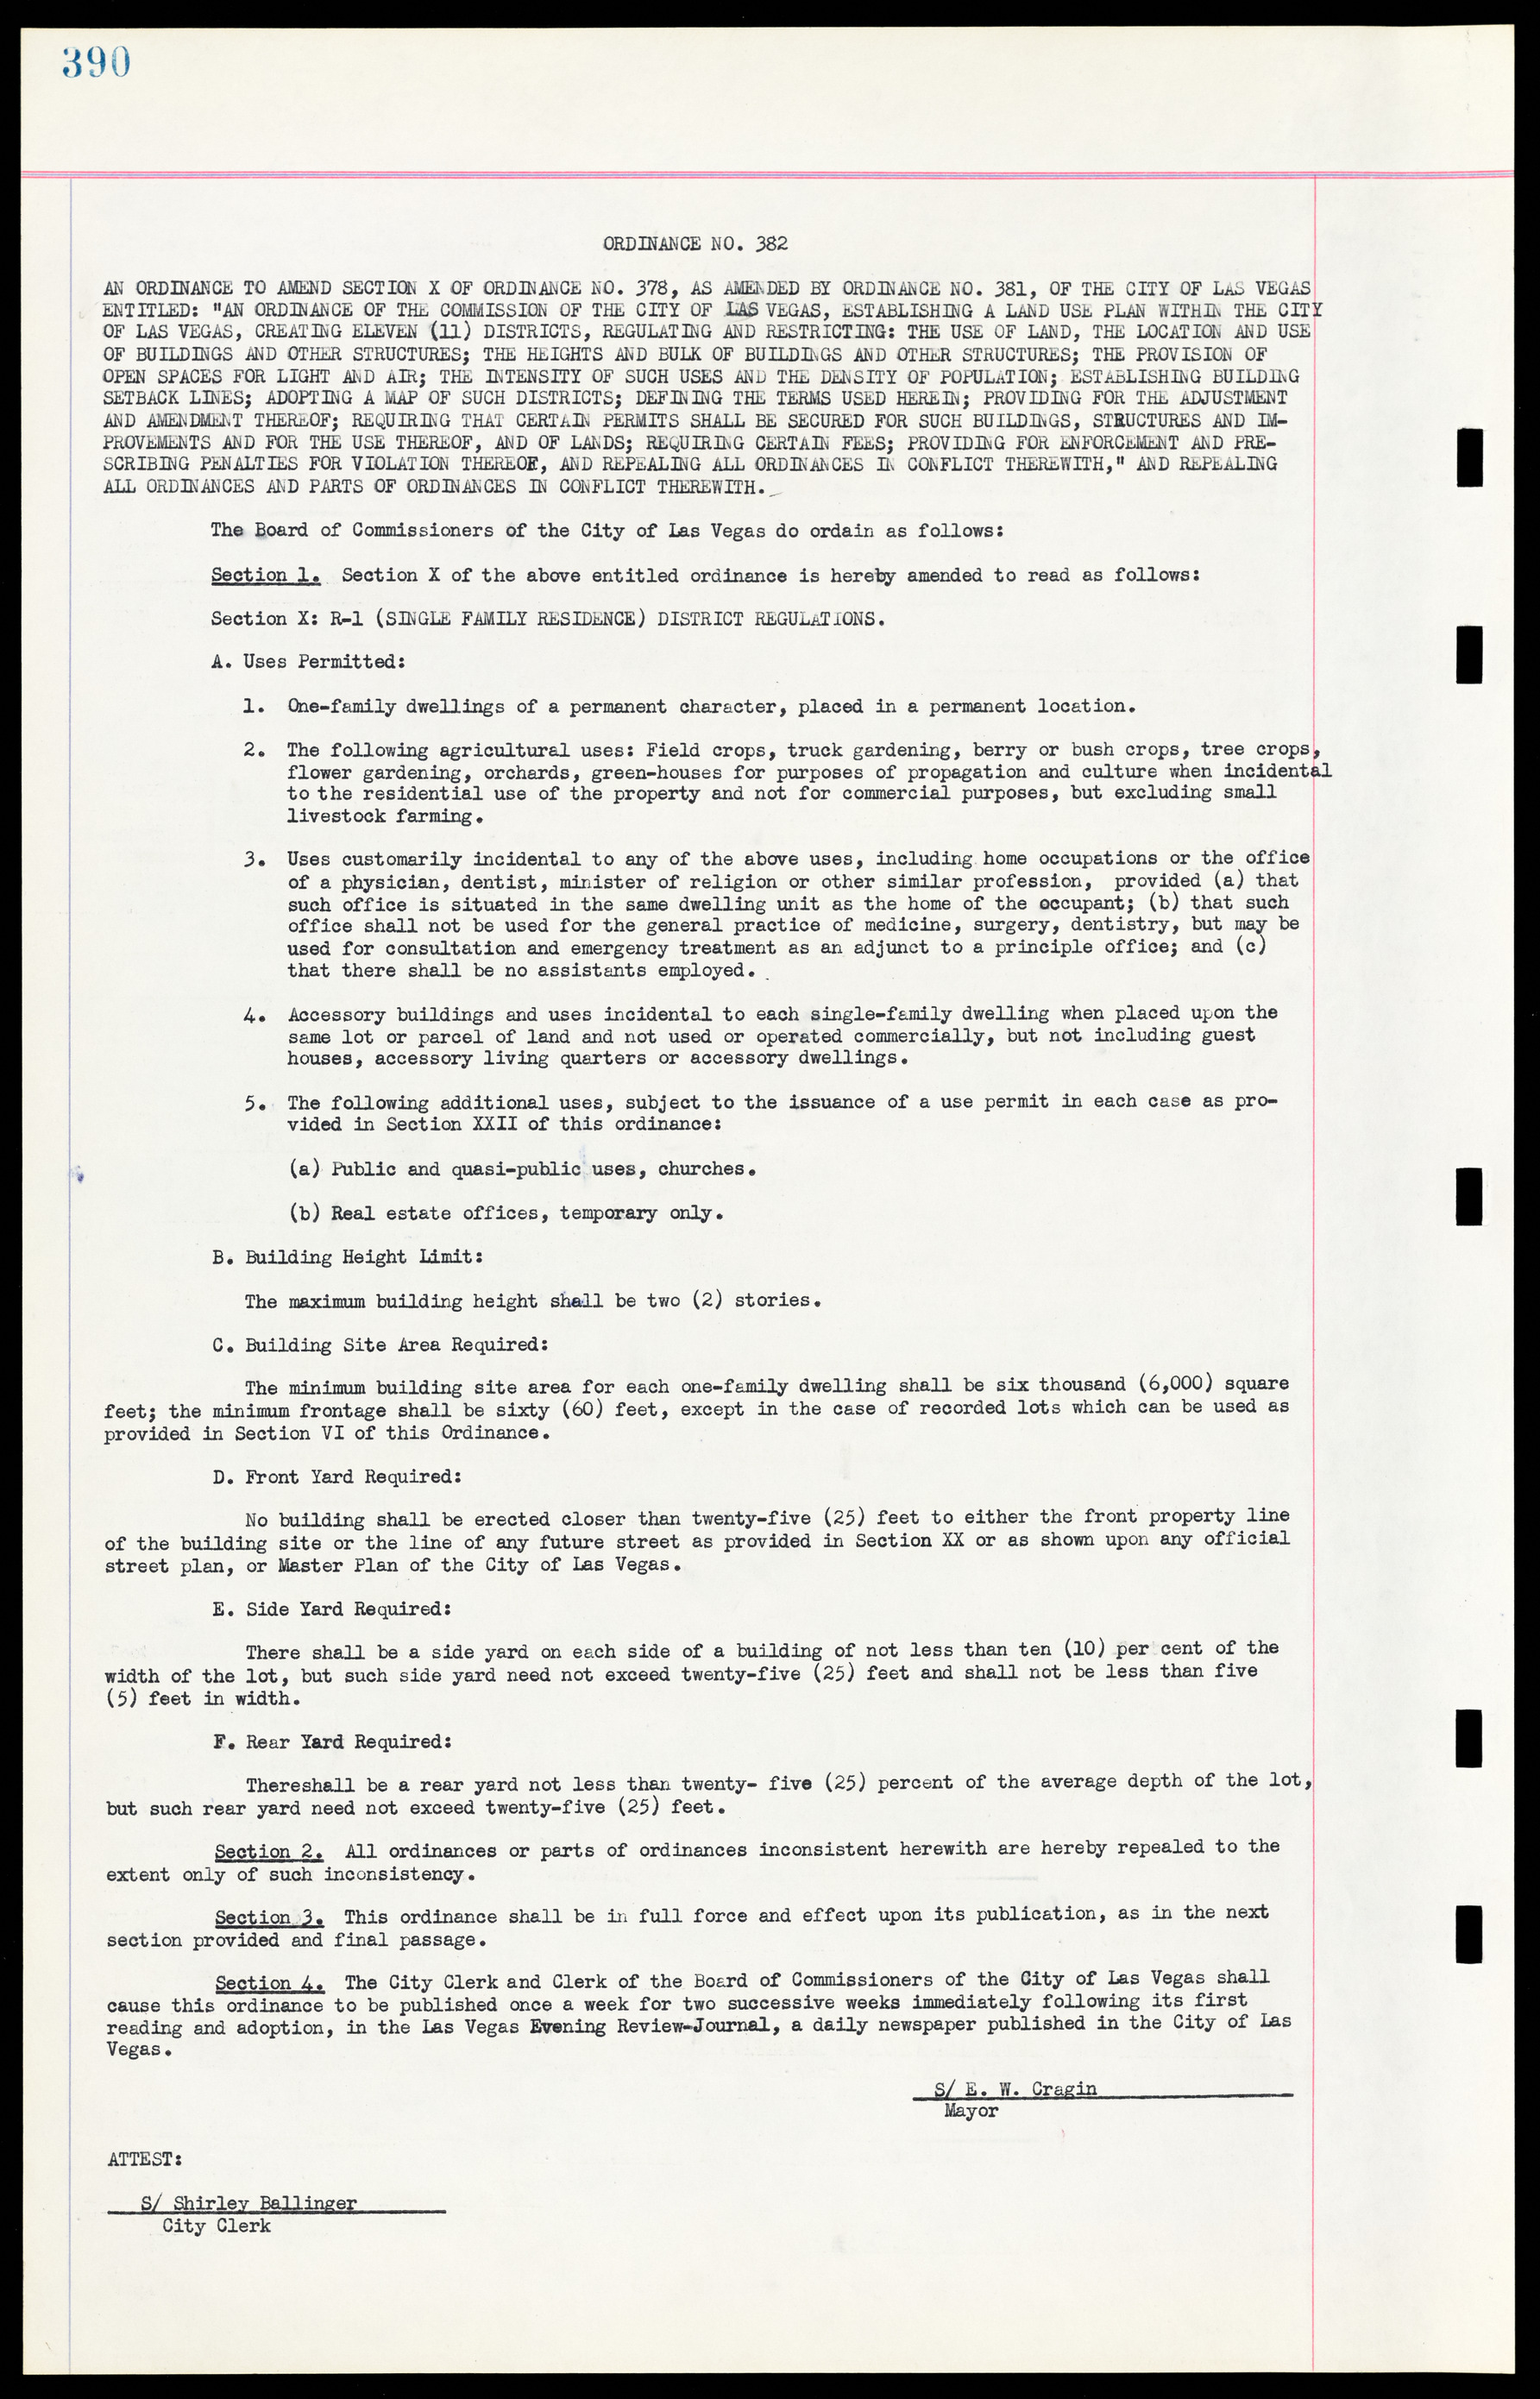 Las Vegas City Ordinances, March 31, 1933 to October 25, 1950, lvc000014-419